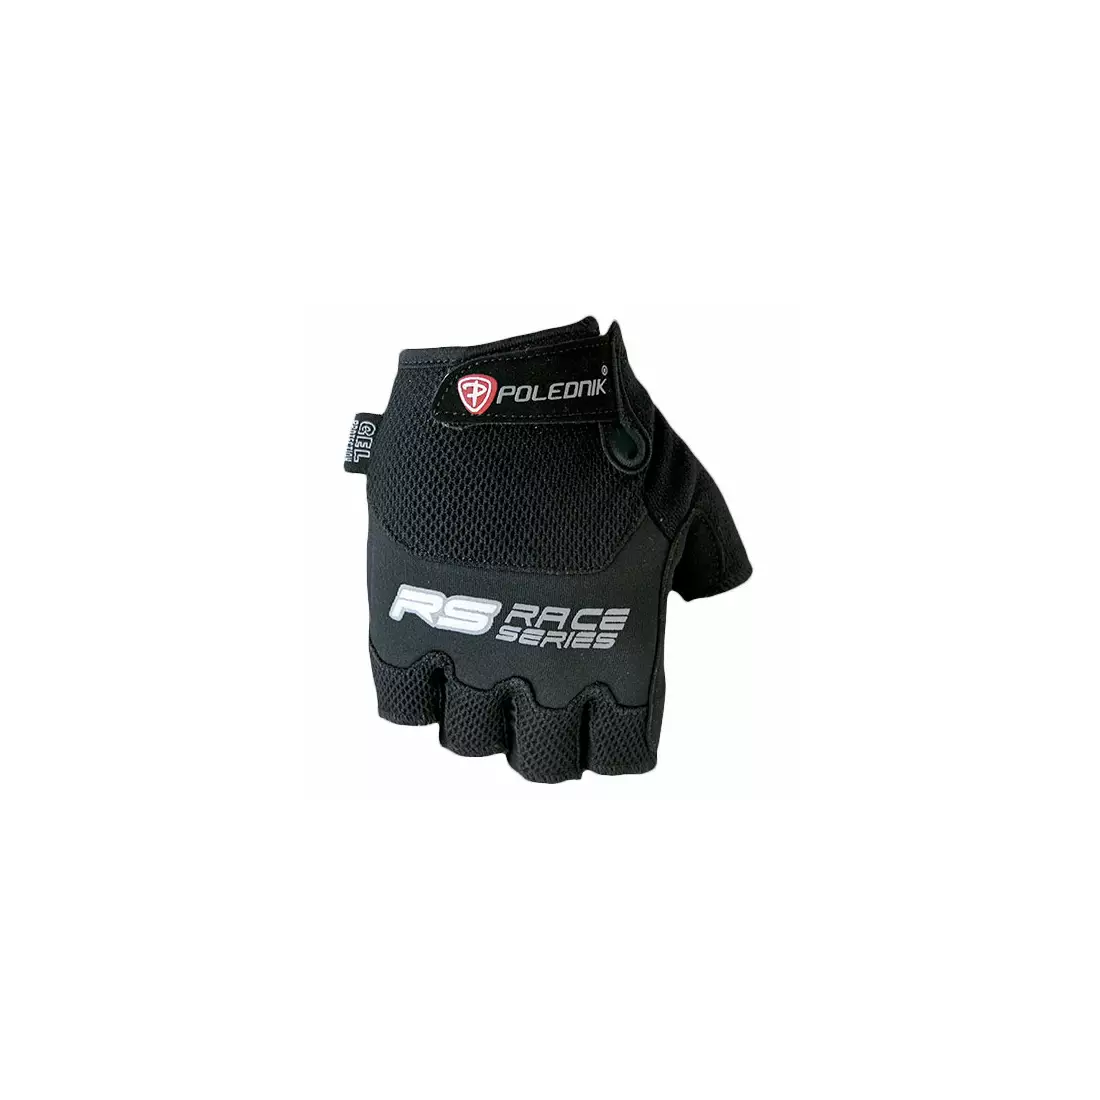 POLEDNIK MARATHON RS gloves